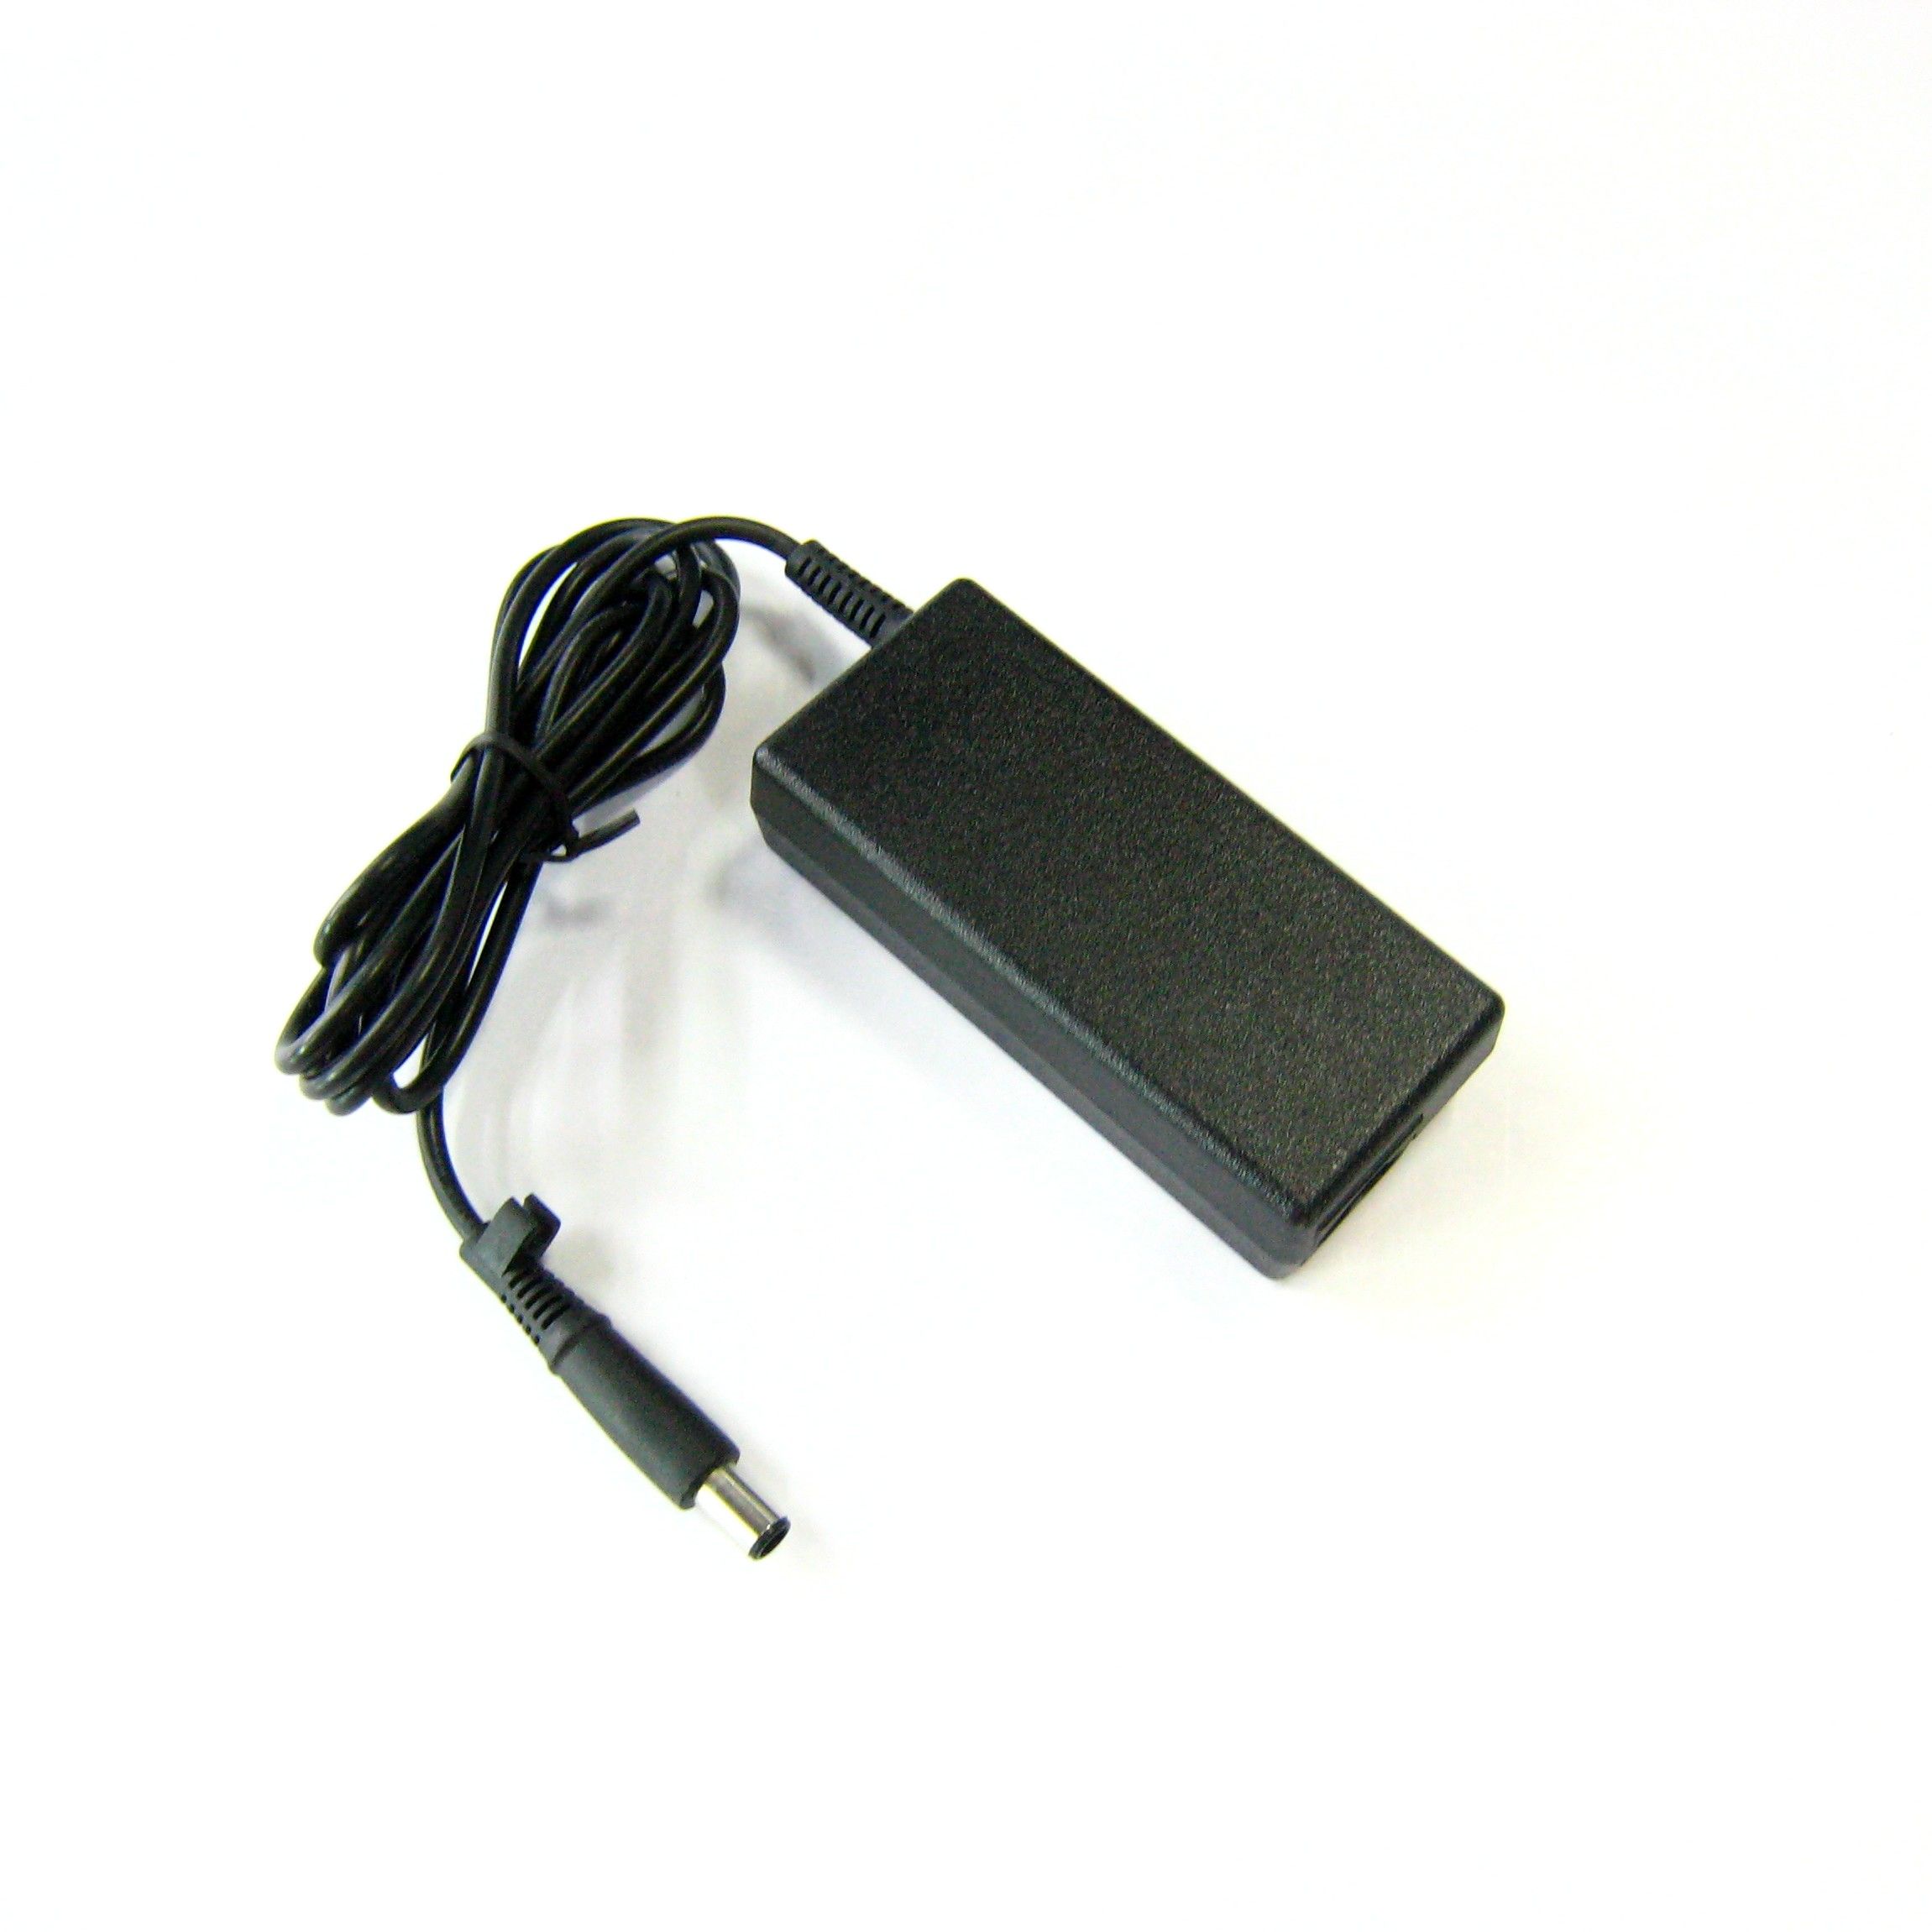 Chargeur Pc portable/ Alimentation HP COMPAQ Presario A900